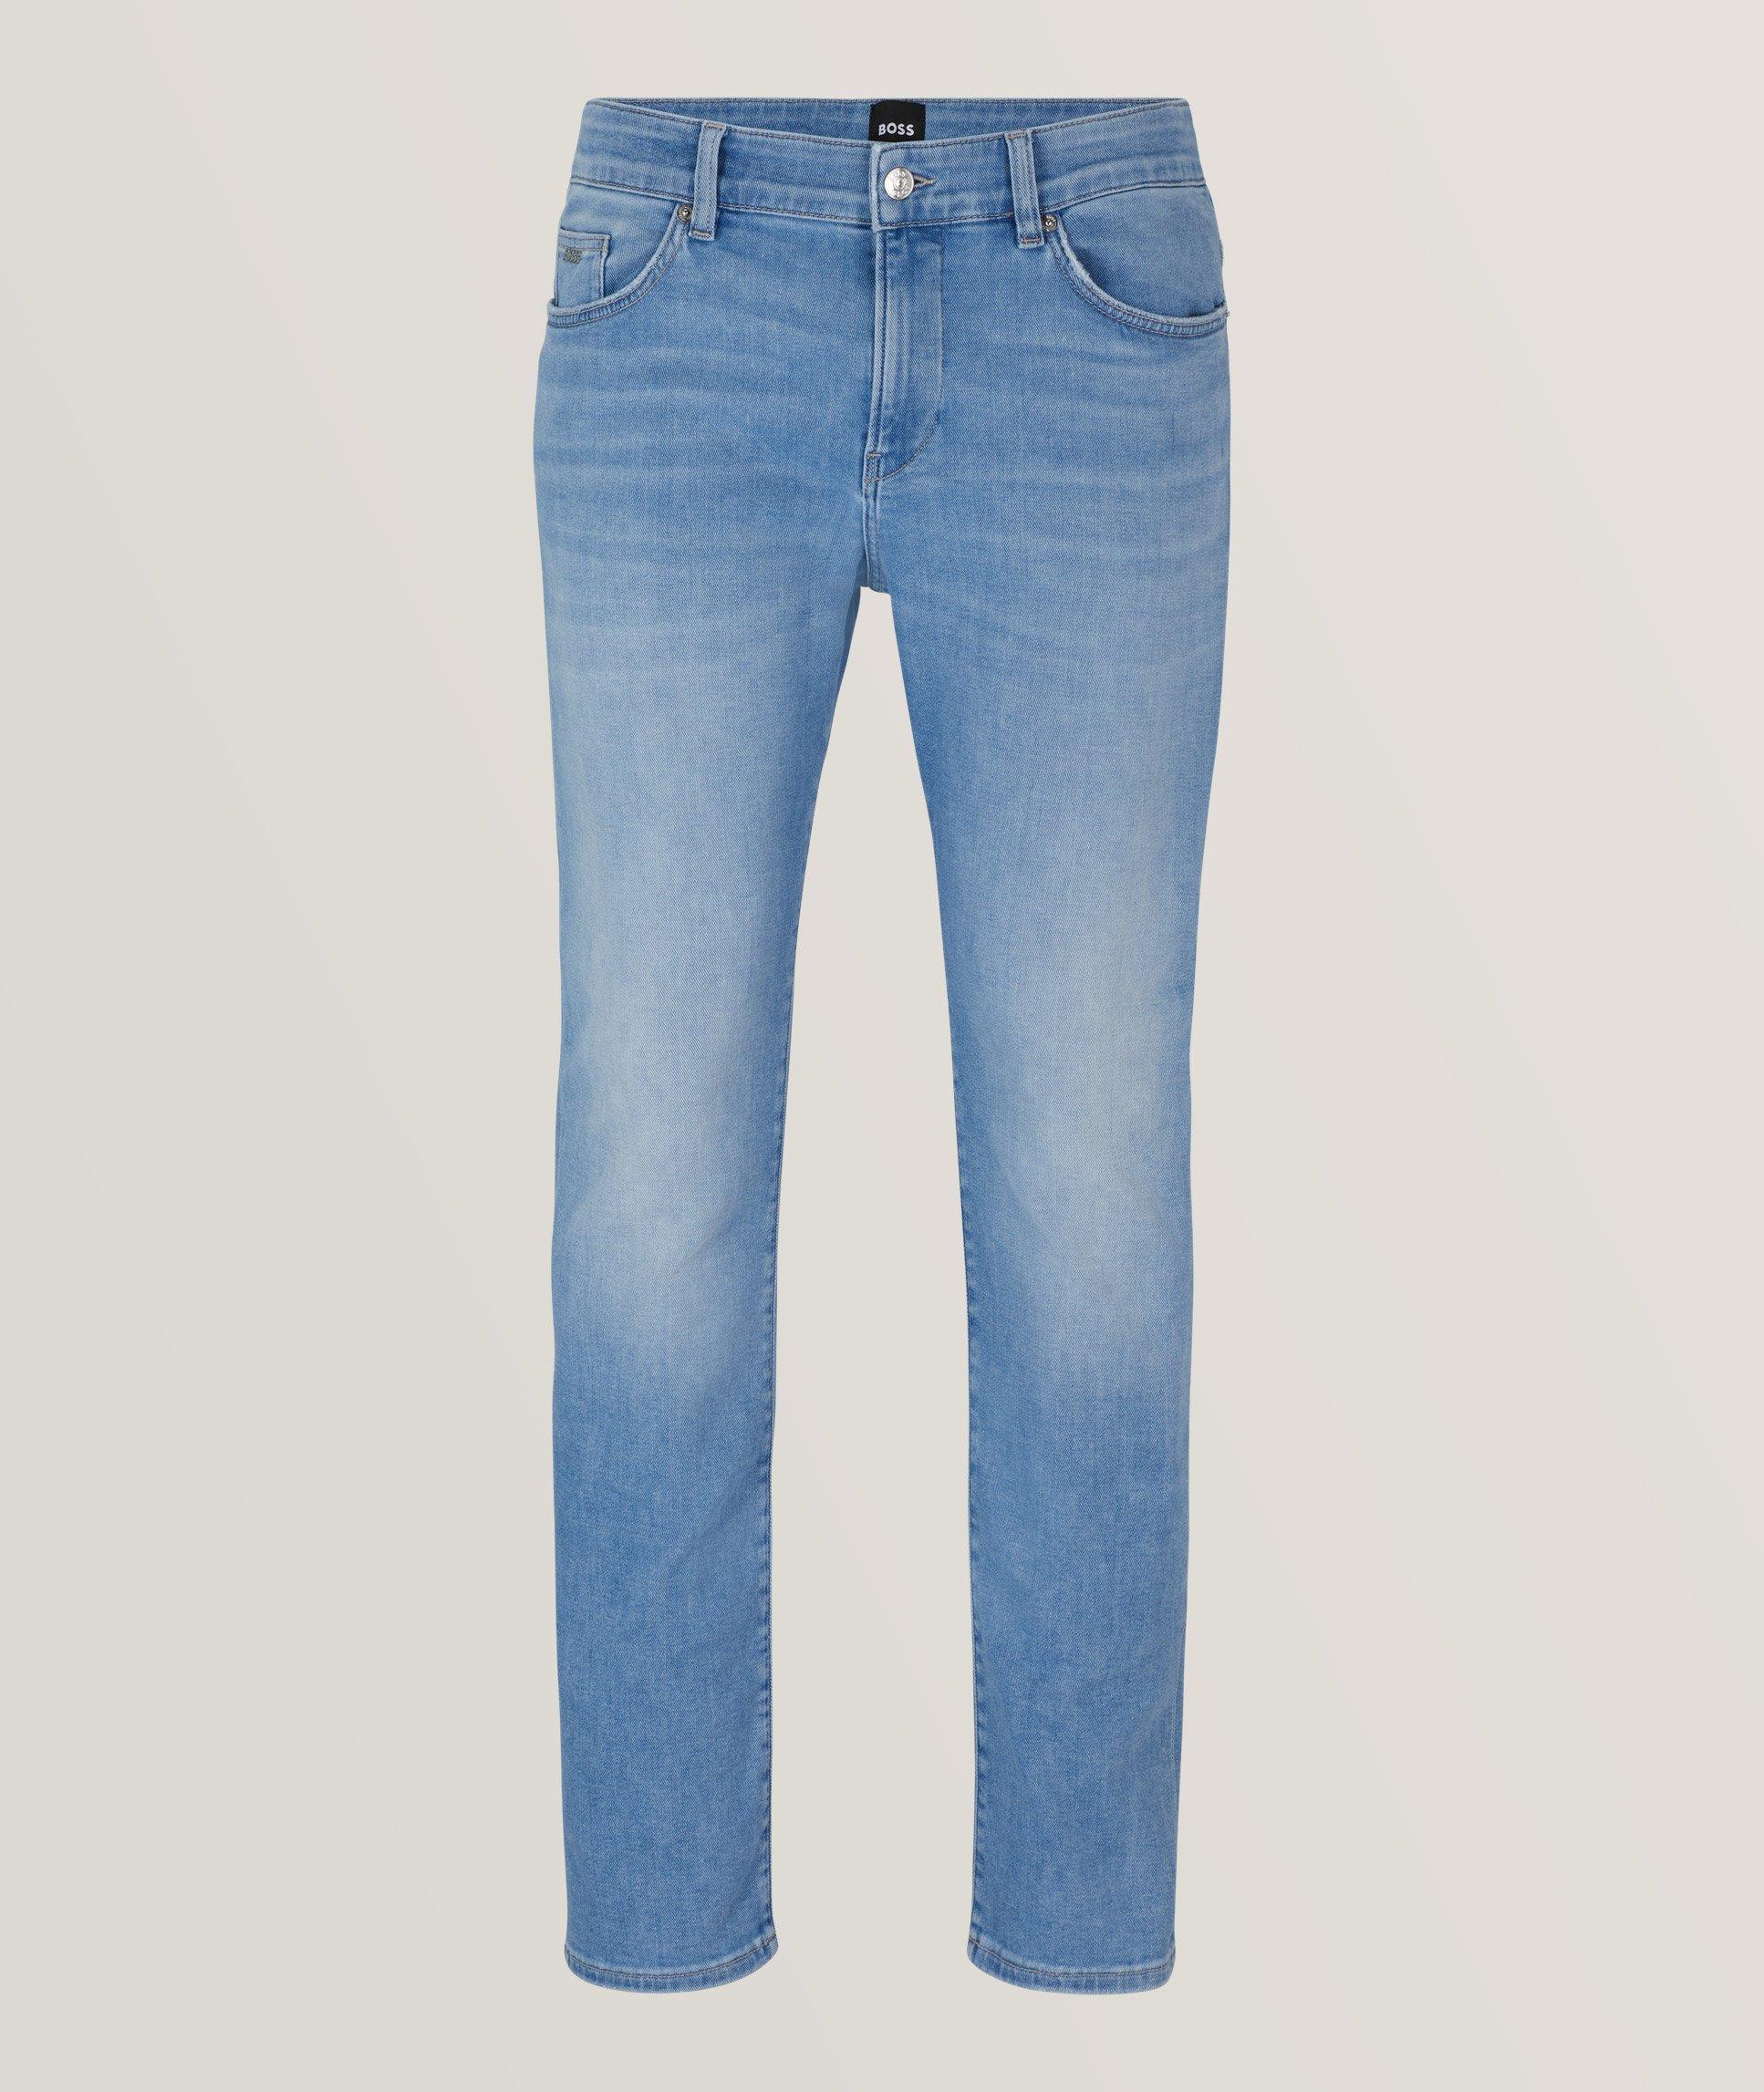 Buy Blue Jeans for Men by BREAKPOINT Online